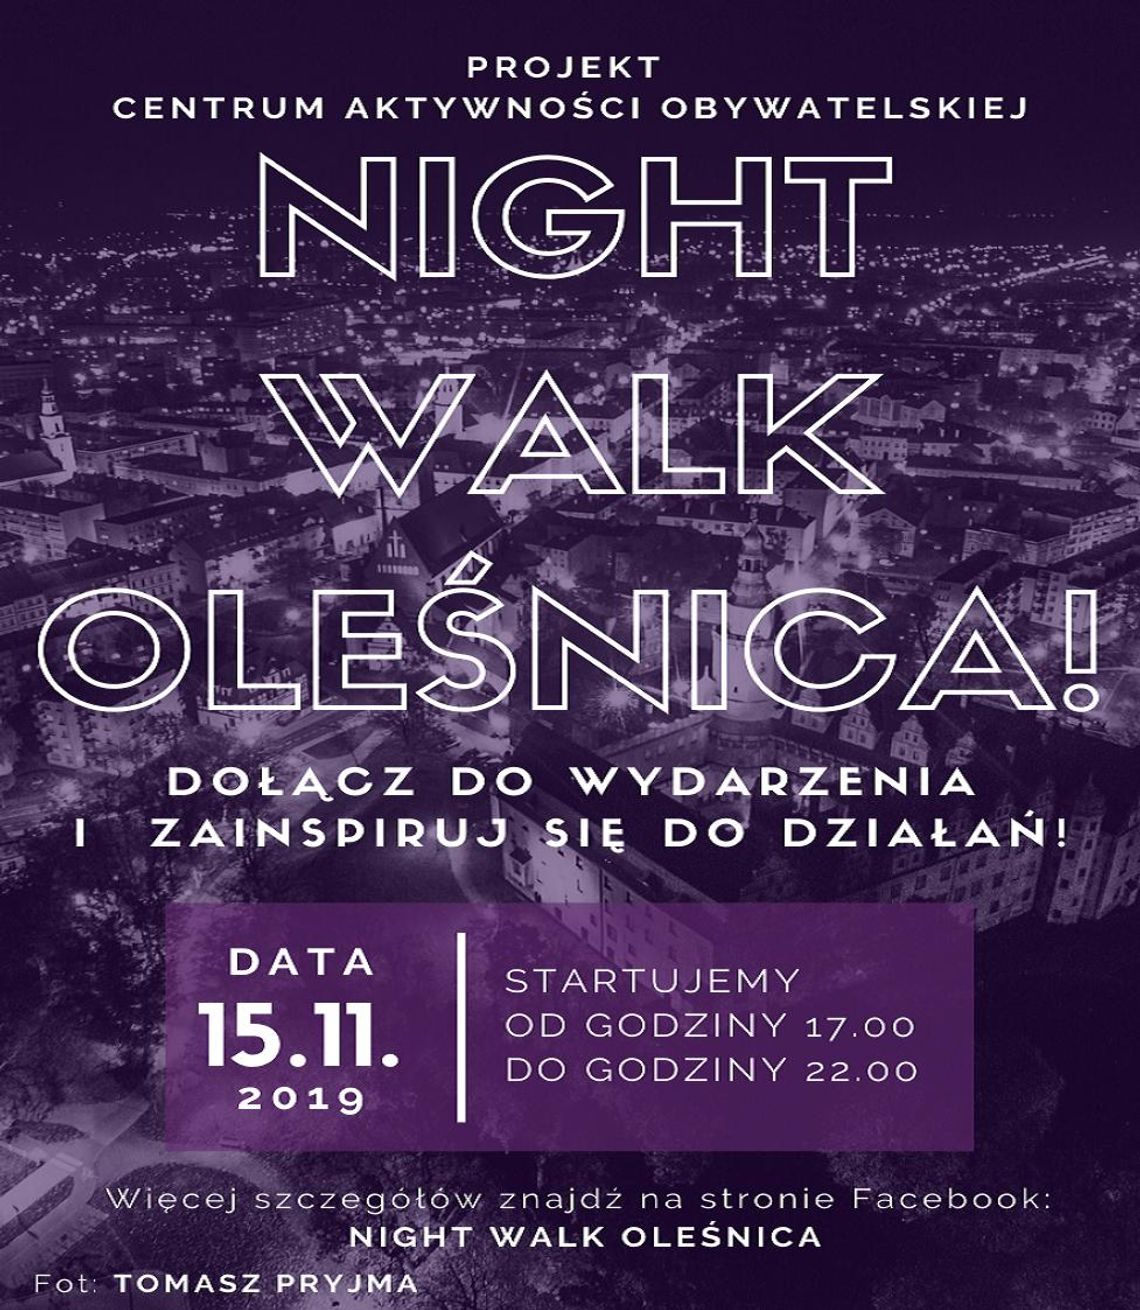 Oleśnica by night